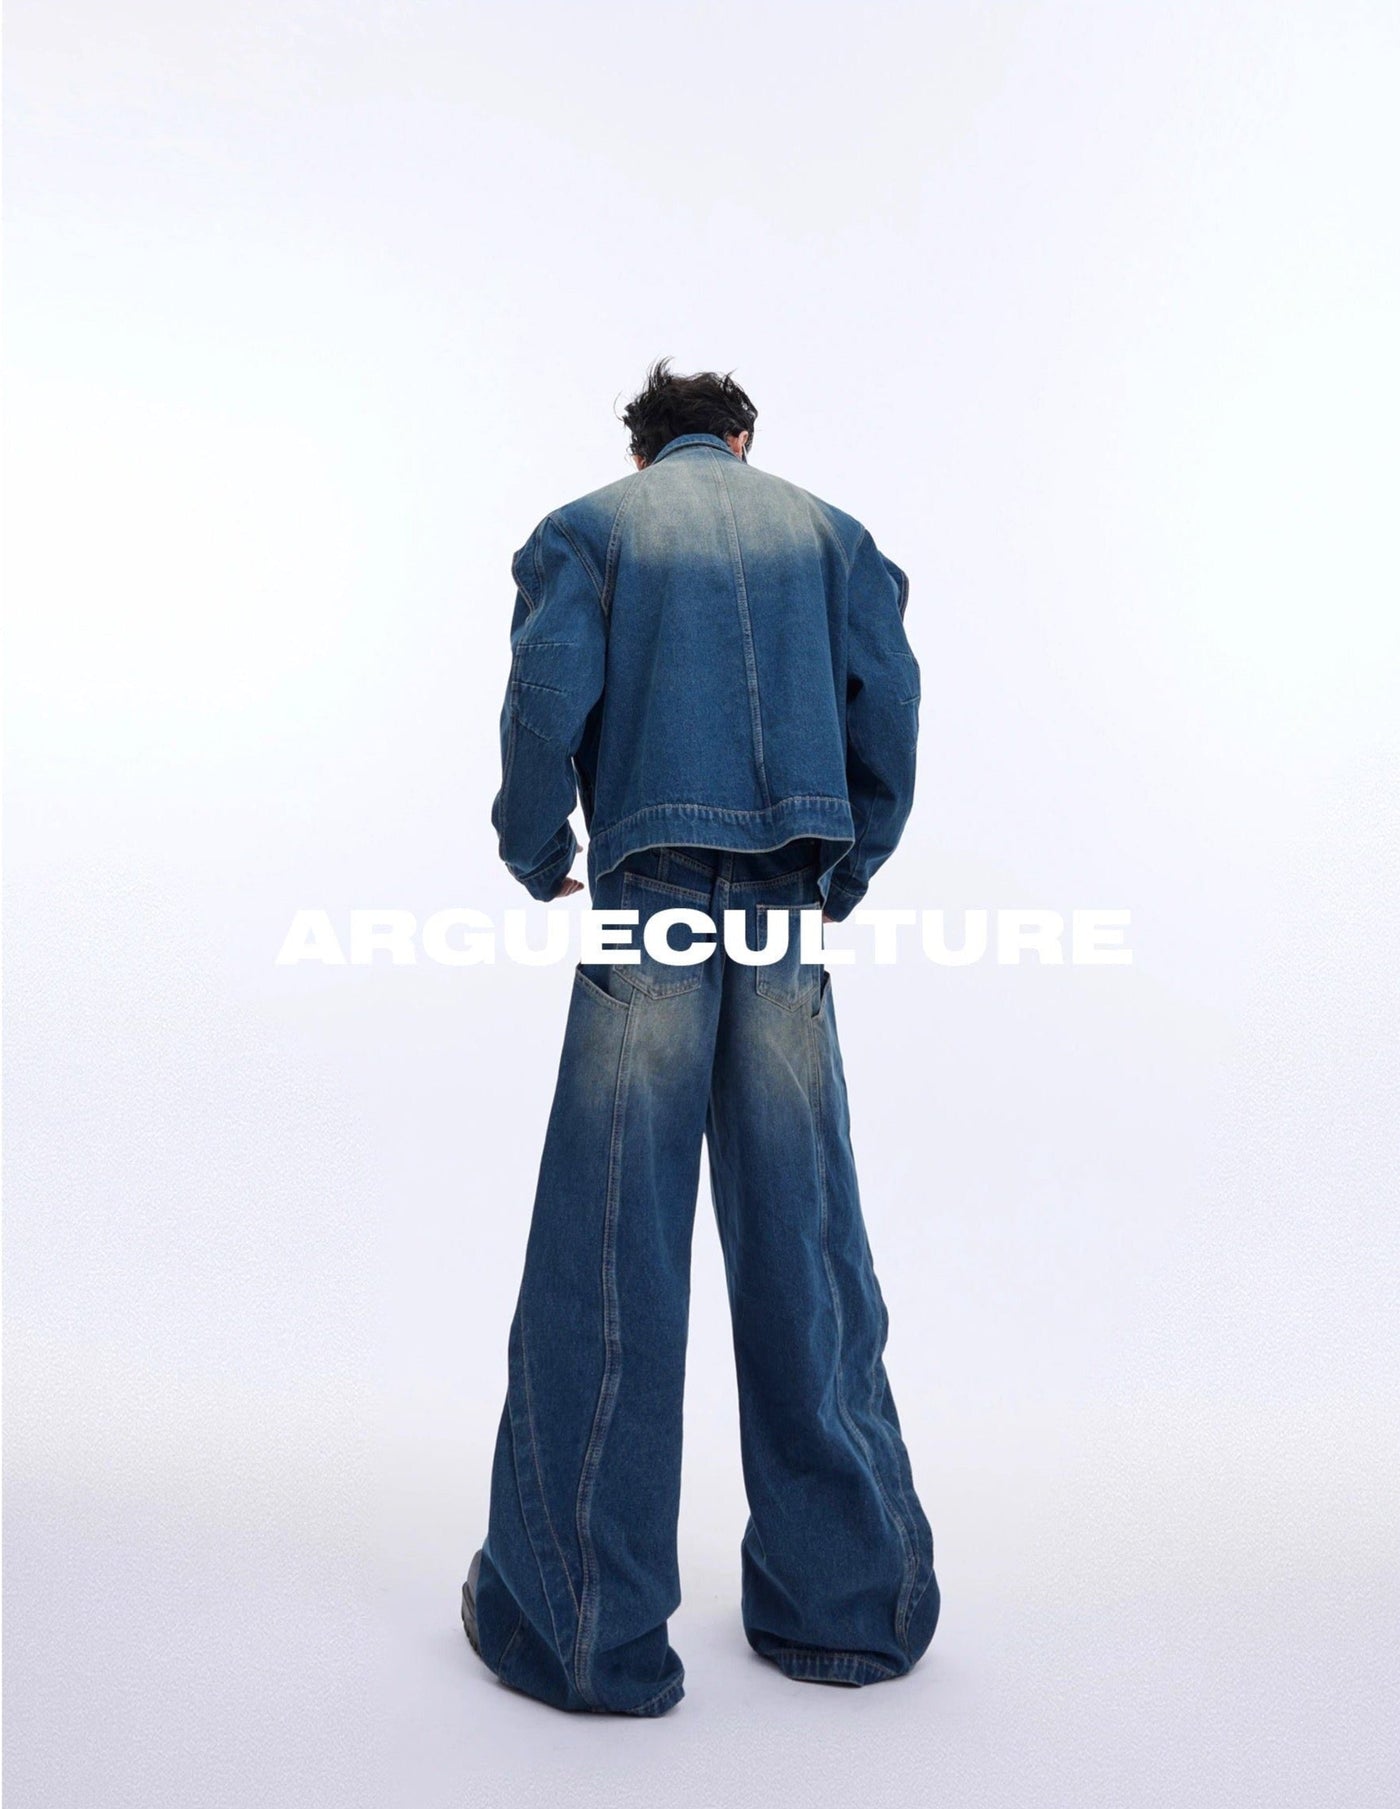 Structured Faded Denim Jacket & Jeans Set Korean Street Fashion Clothing Set By Argue Culture Shop Online at OH Vault